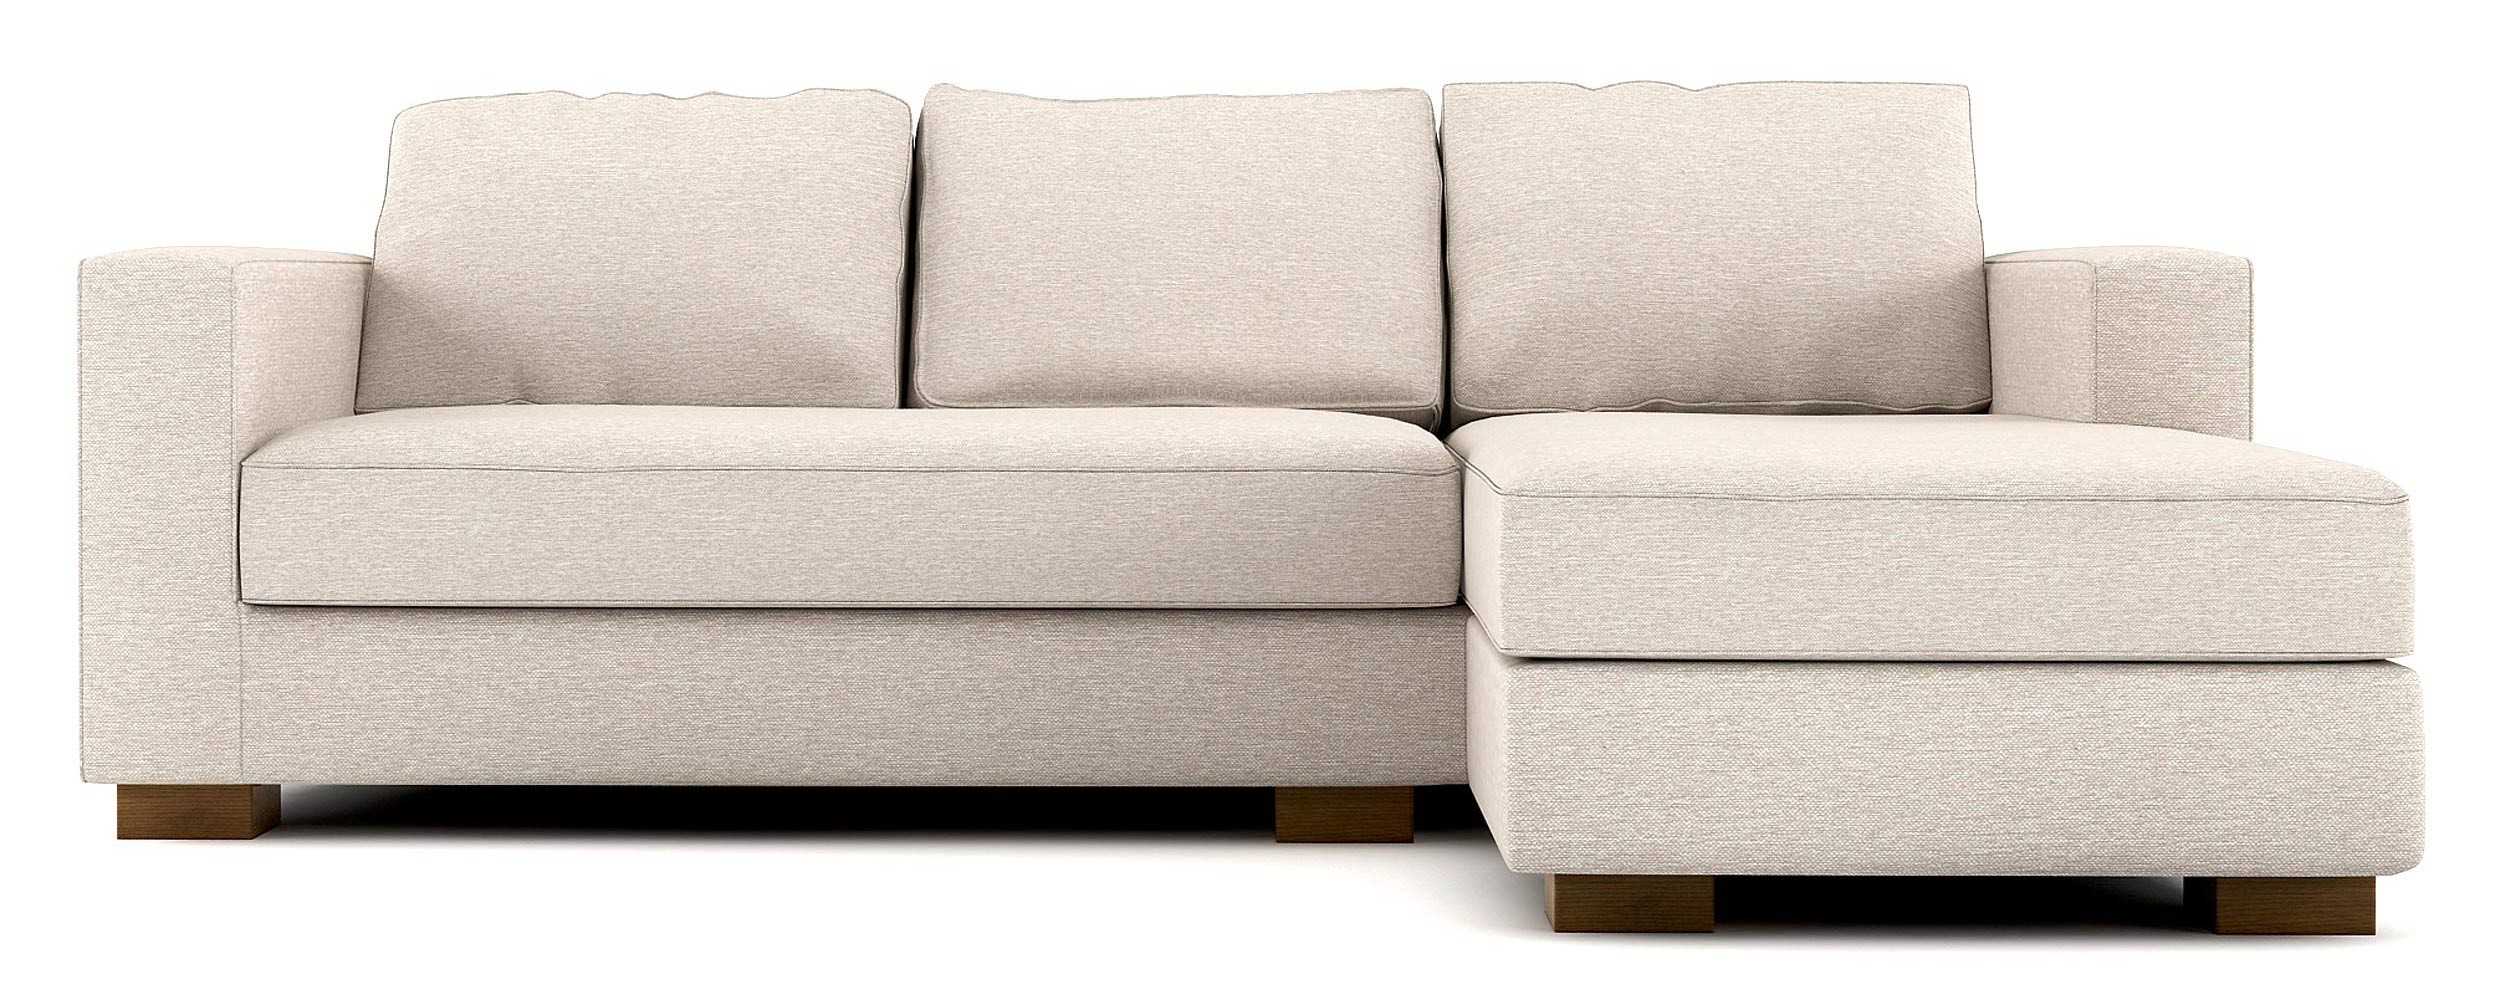 custom sectional sofa rio apartment chaise sectional ... CIFHHVB